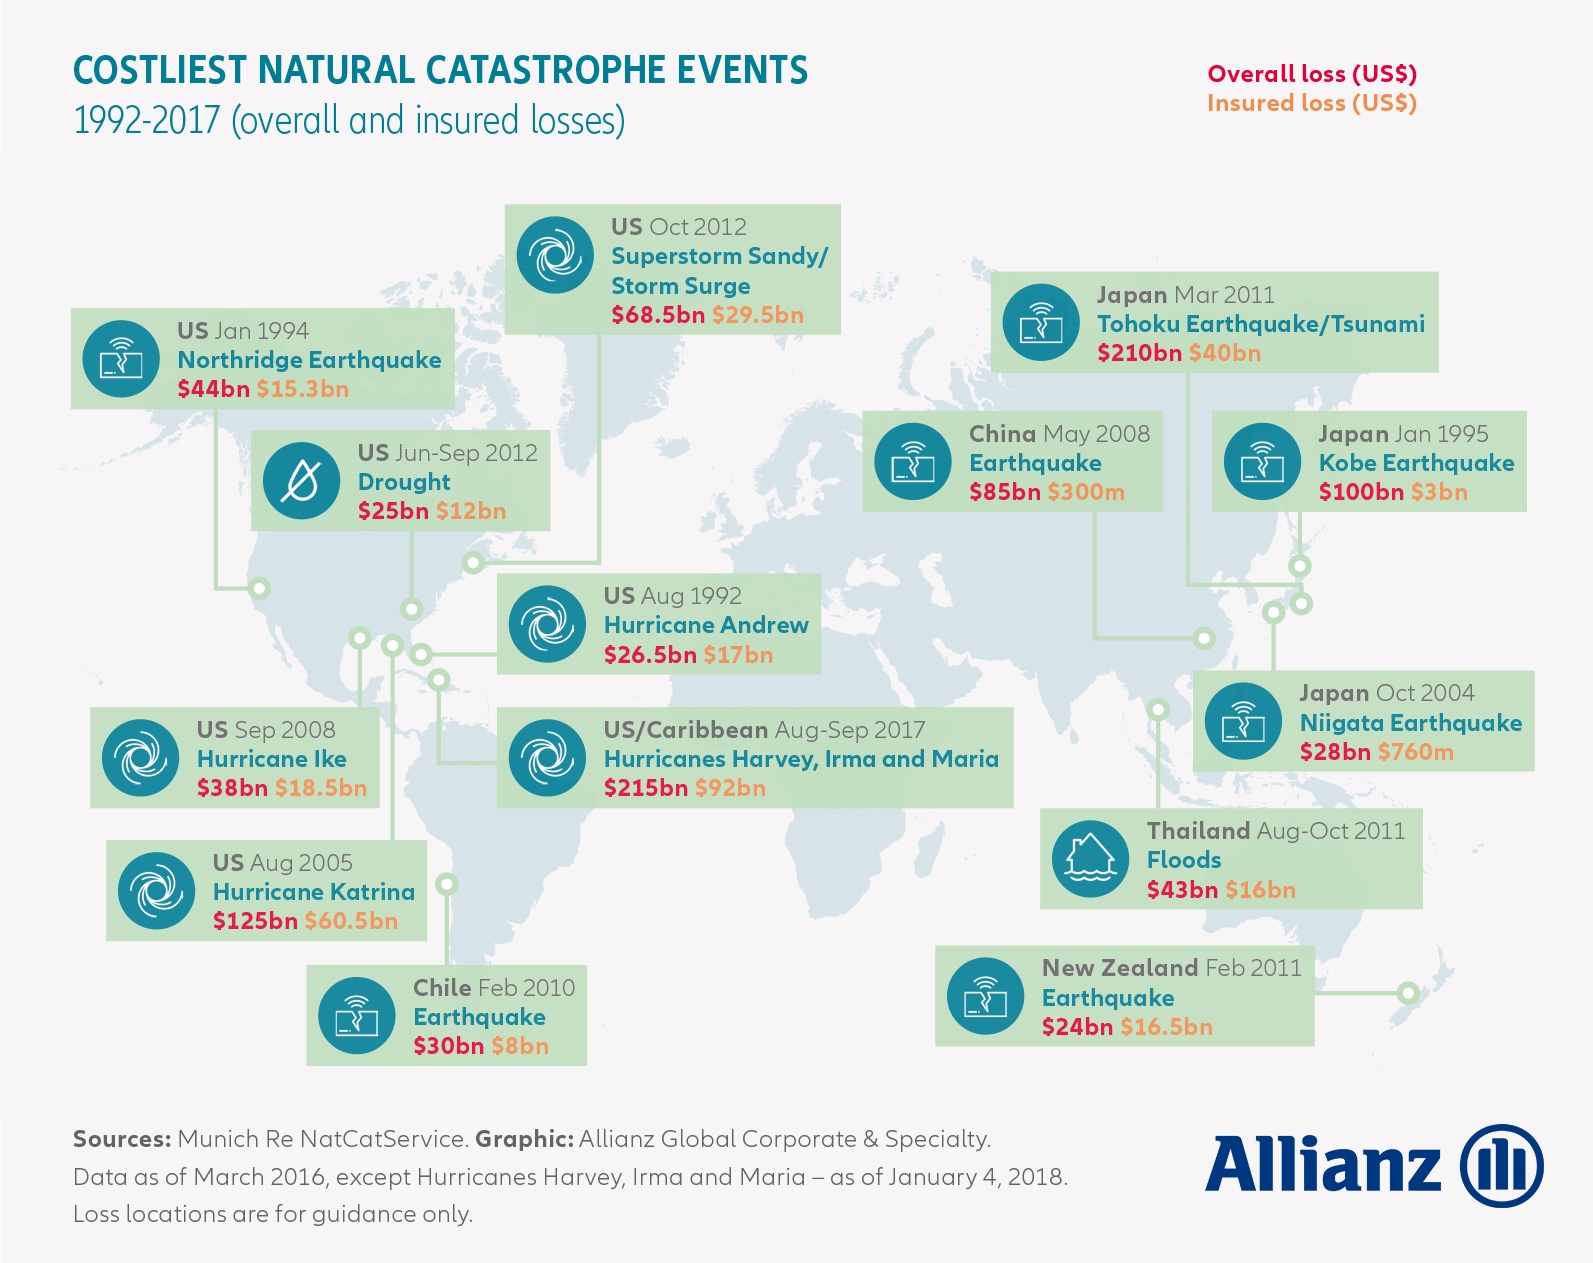 Costliest natural catastrophes 1992-2017